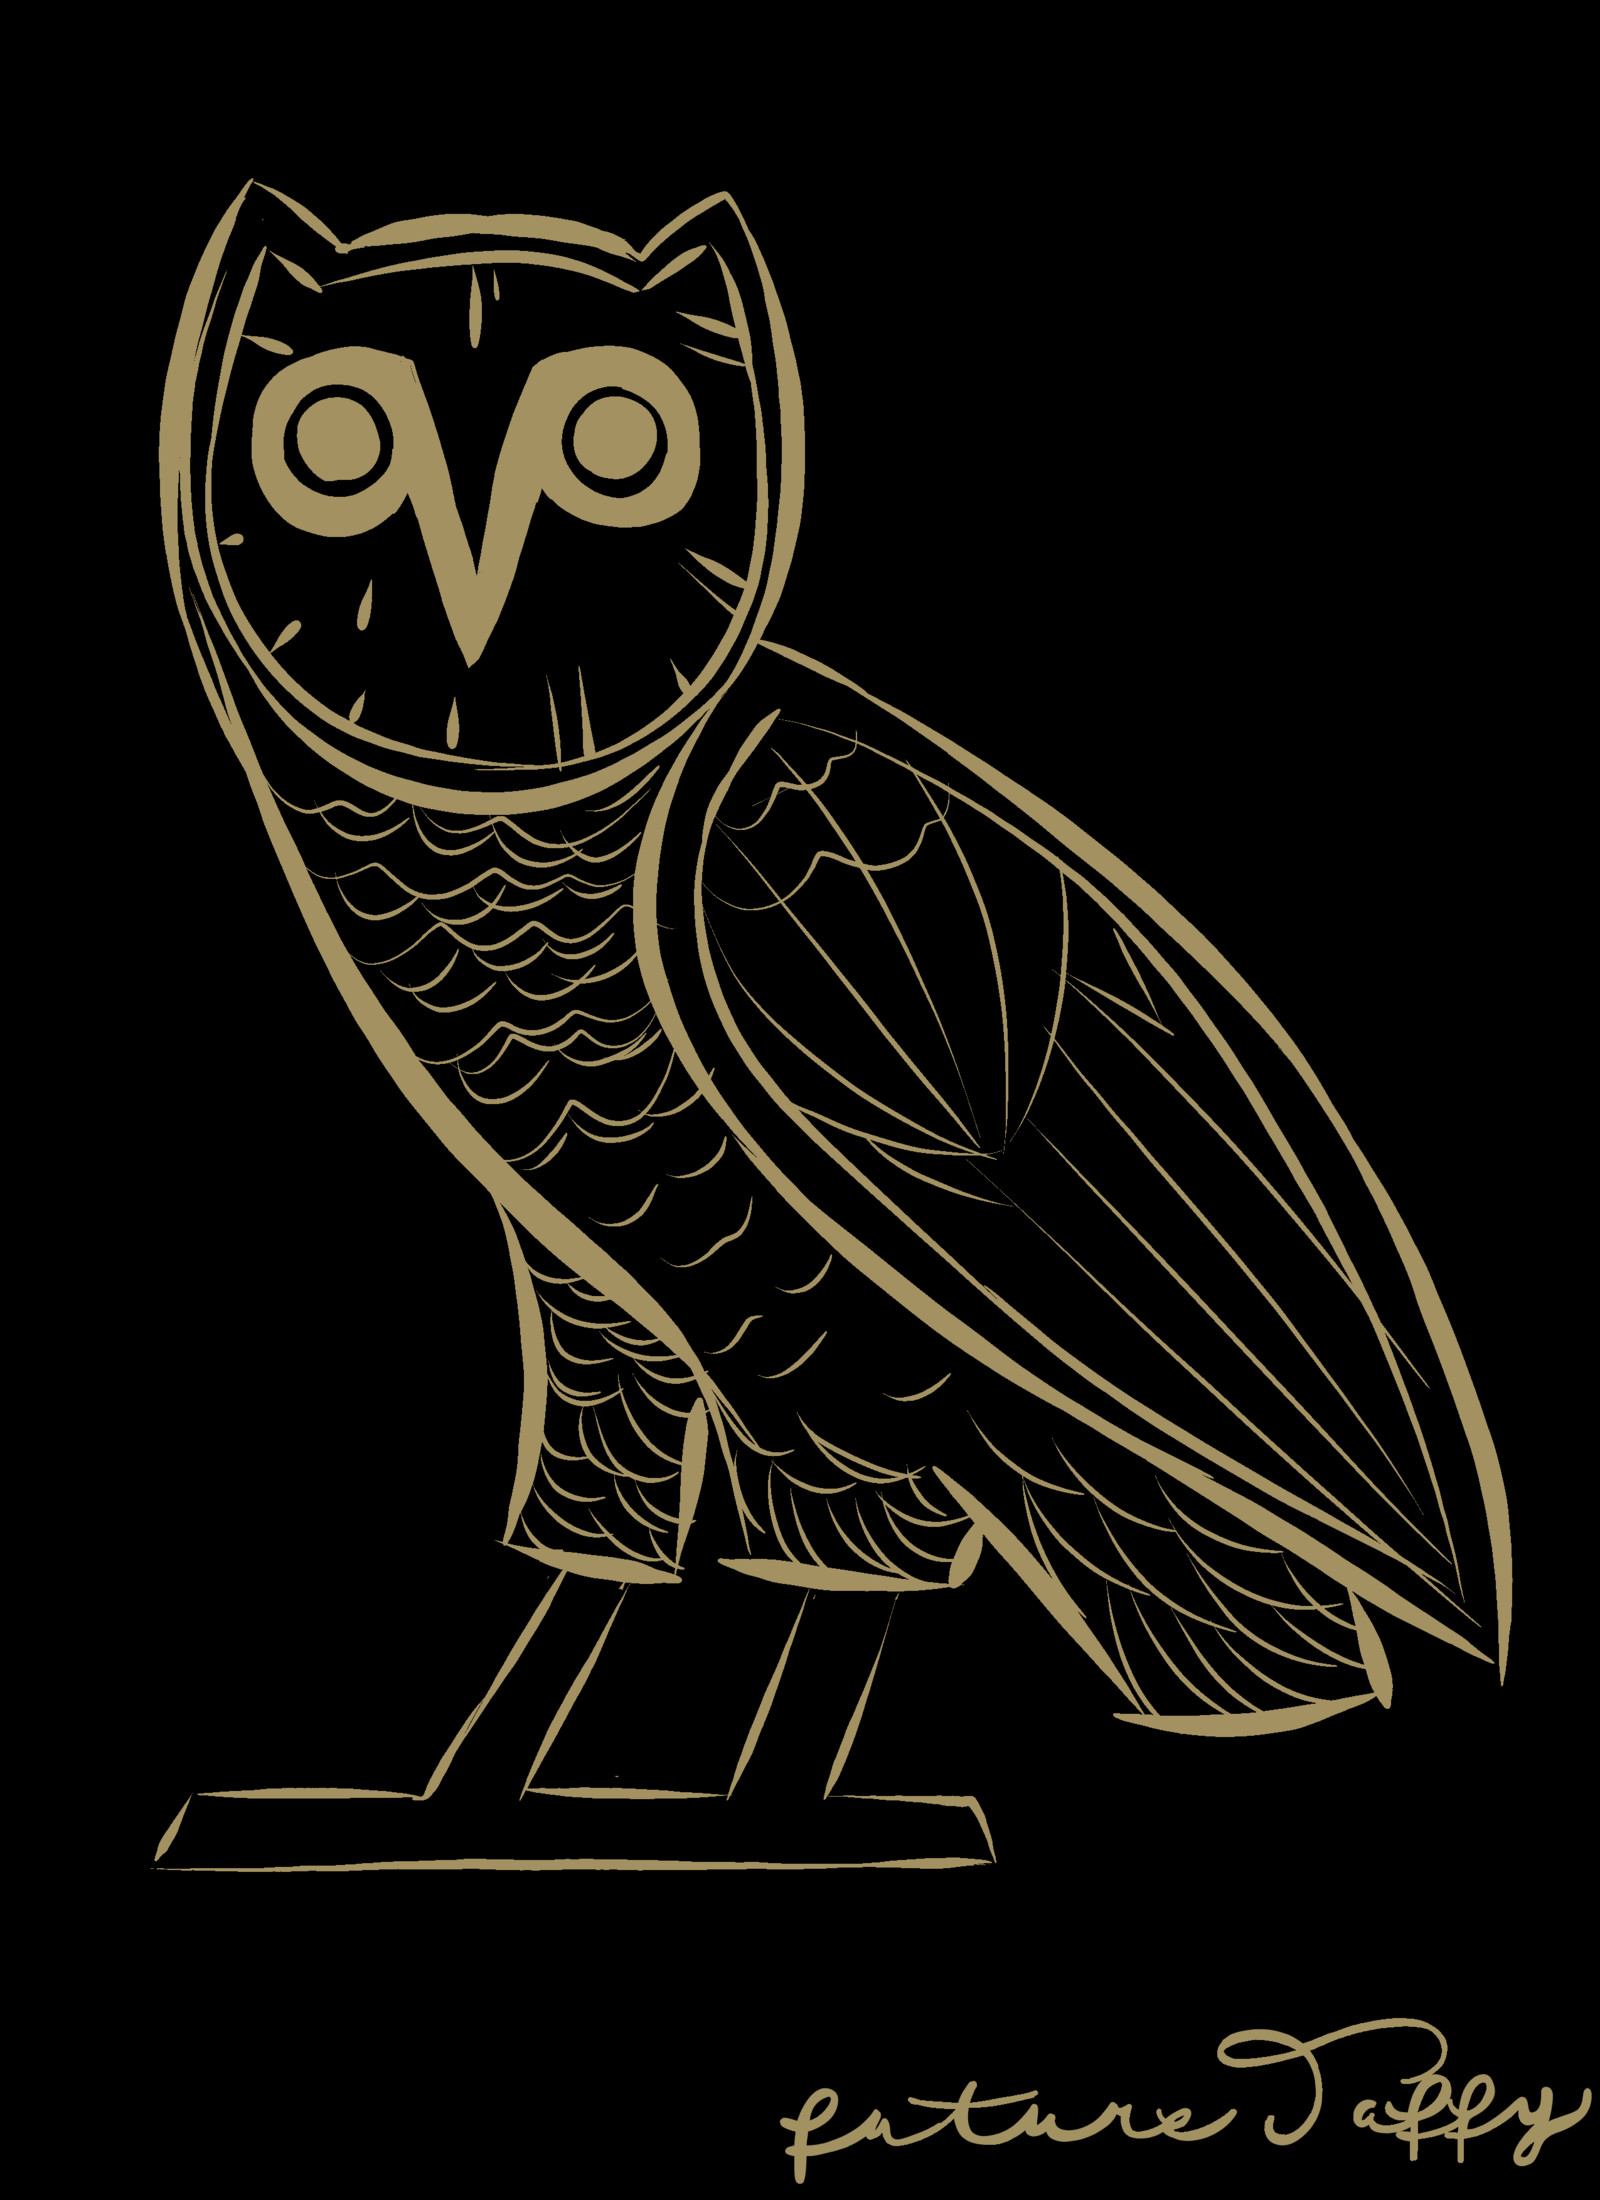 TaffySummer6ixteen Octobers Very Own Owl with background 2015 by TaffySummer6ixteen